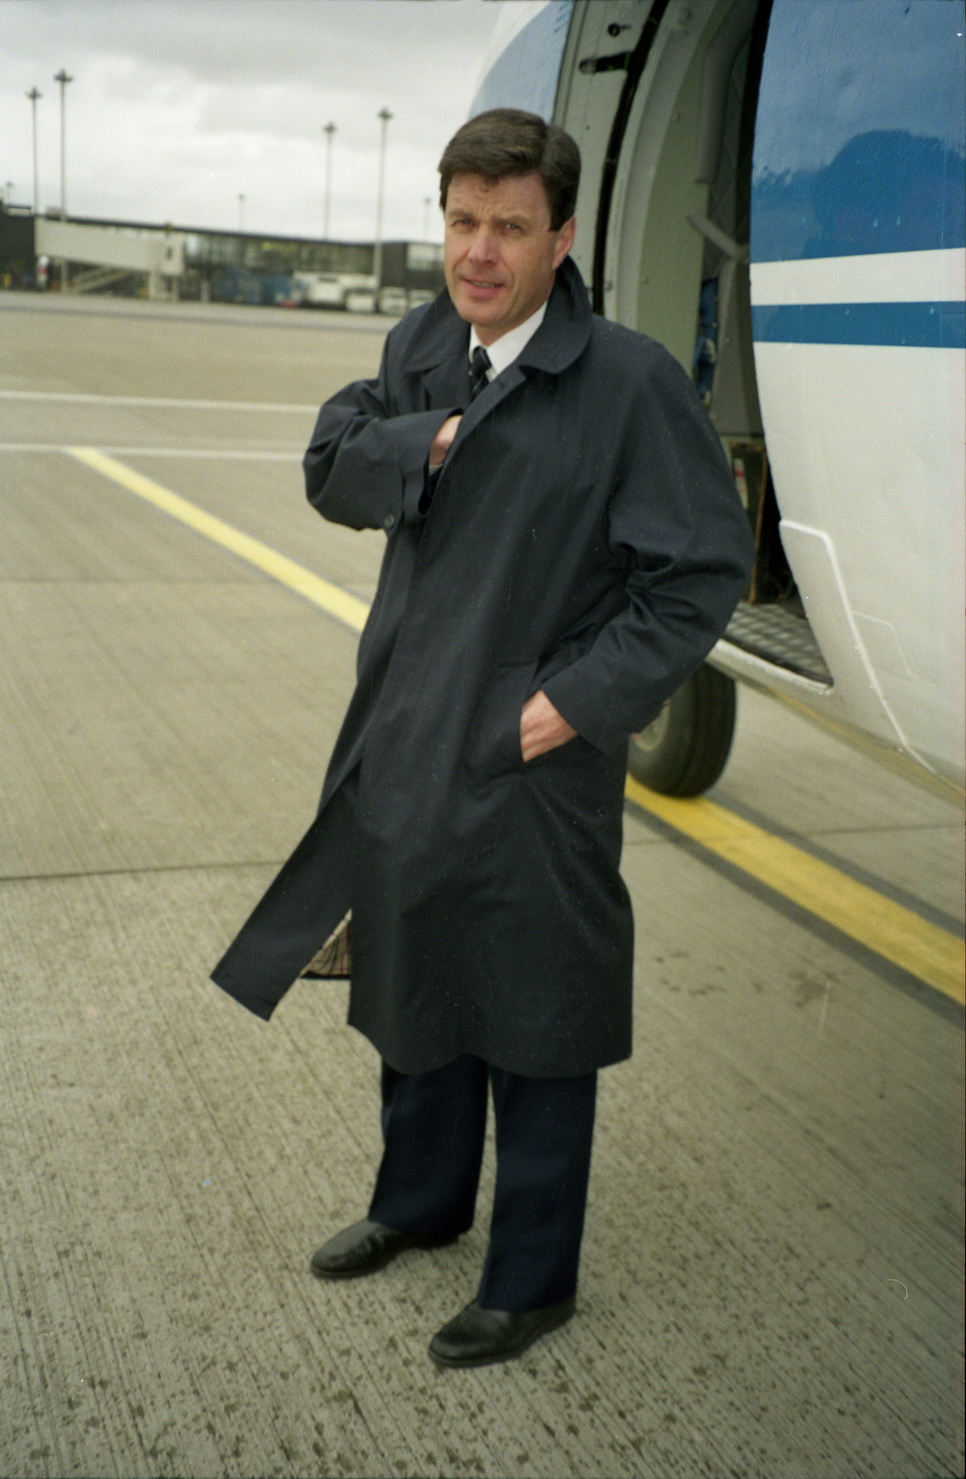 Hallgrimur Jónsson near Fokker F27 in Maastricht airport, The Netherlands, 1992 // Source: Hallgrimur Jónsson